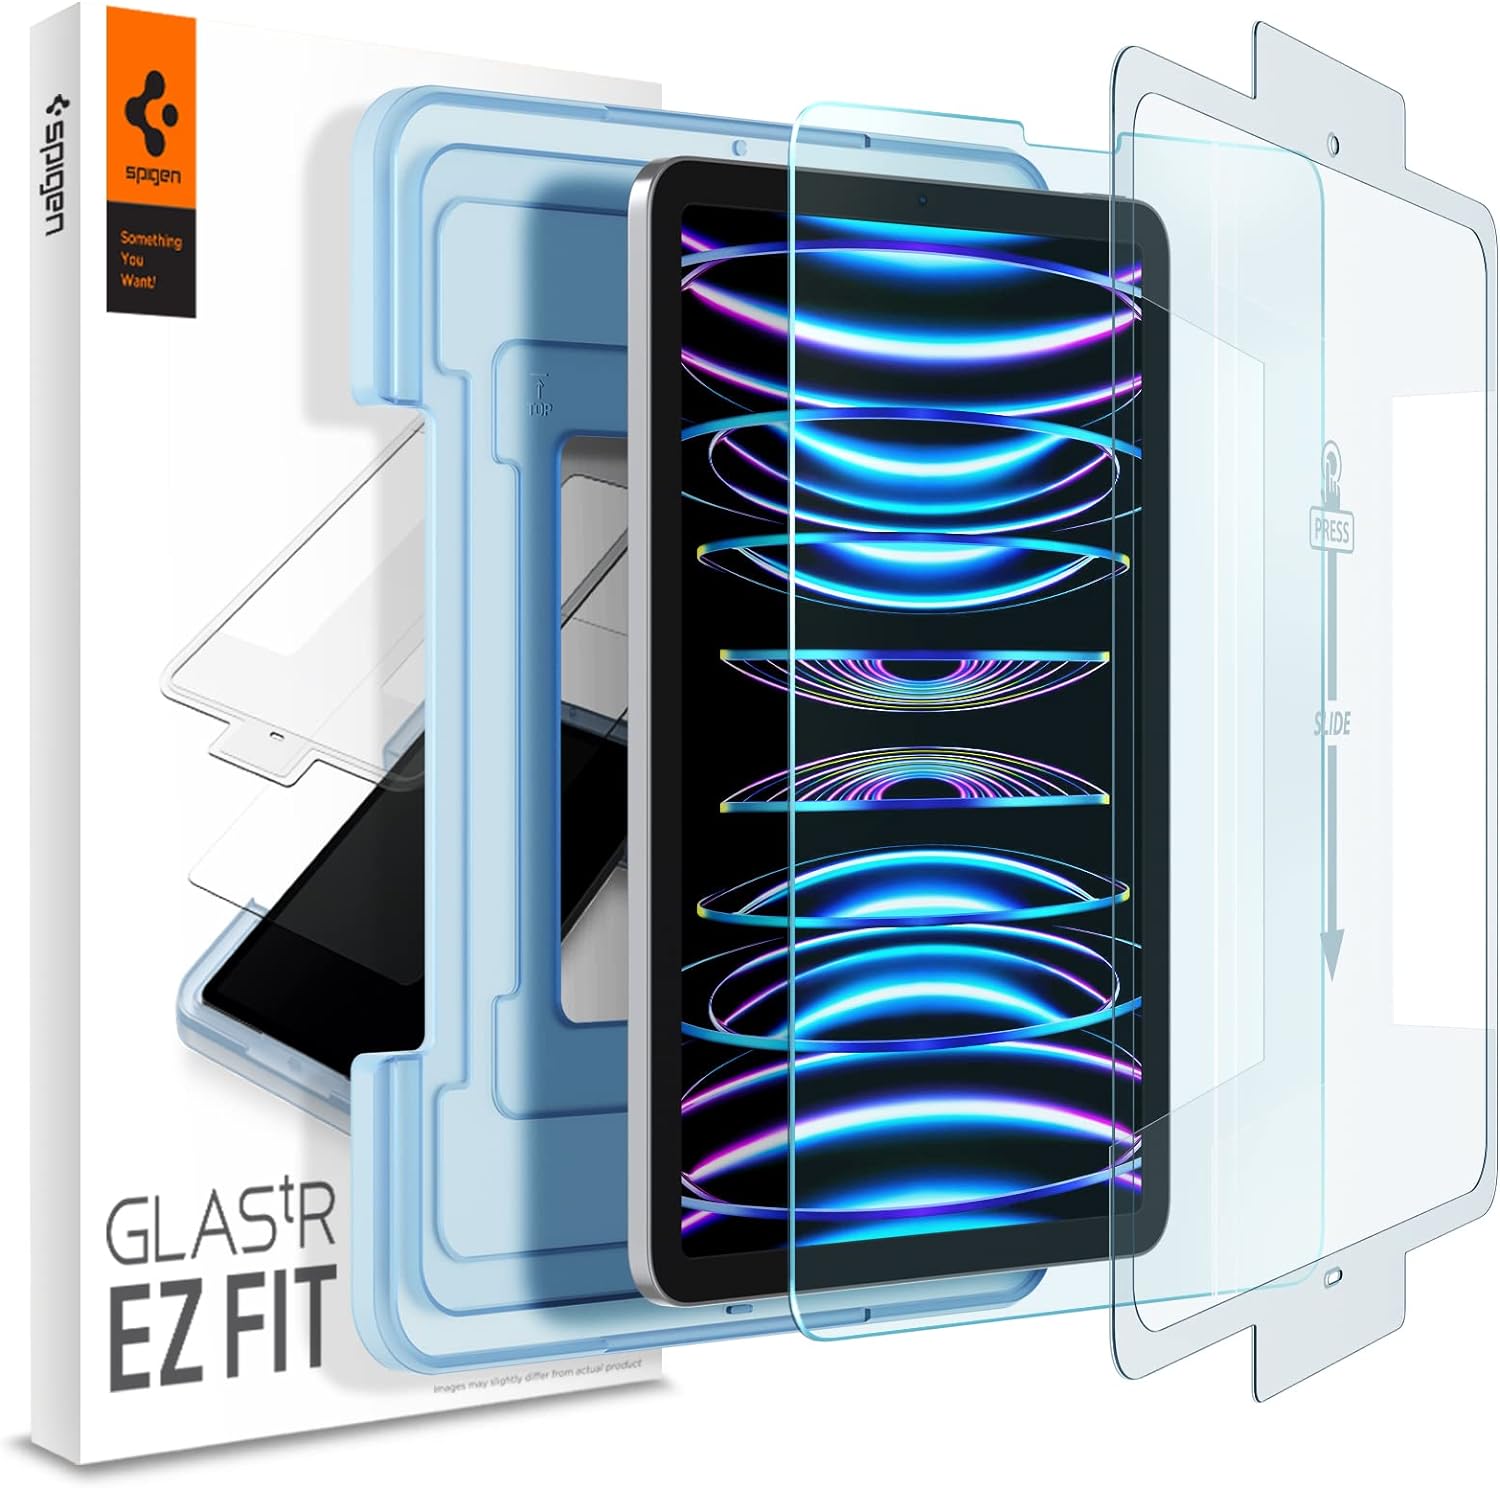 Mica De Vidrio Spigen Glastr Ez Fit iPad Air 10.9 4ta Gen/ 5ta Gen - iPad Pro 11 3era / 4ta Gen